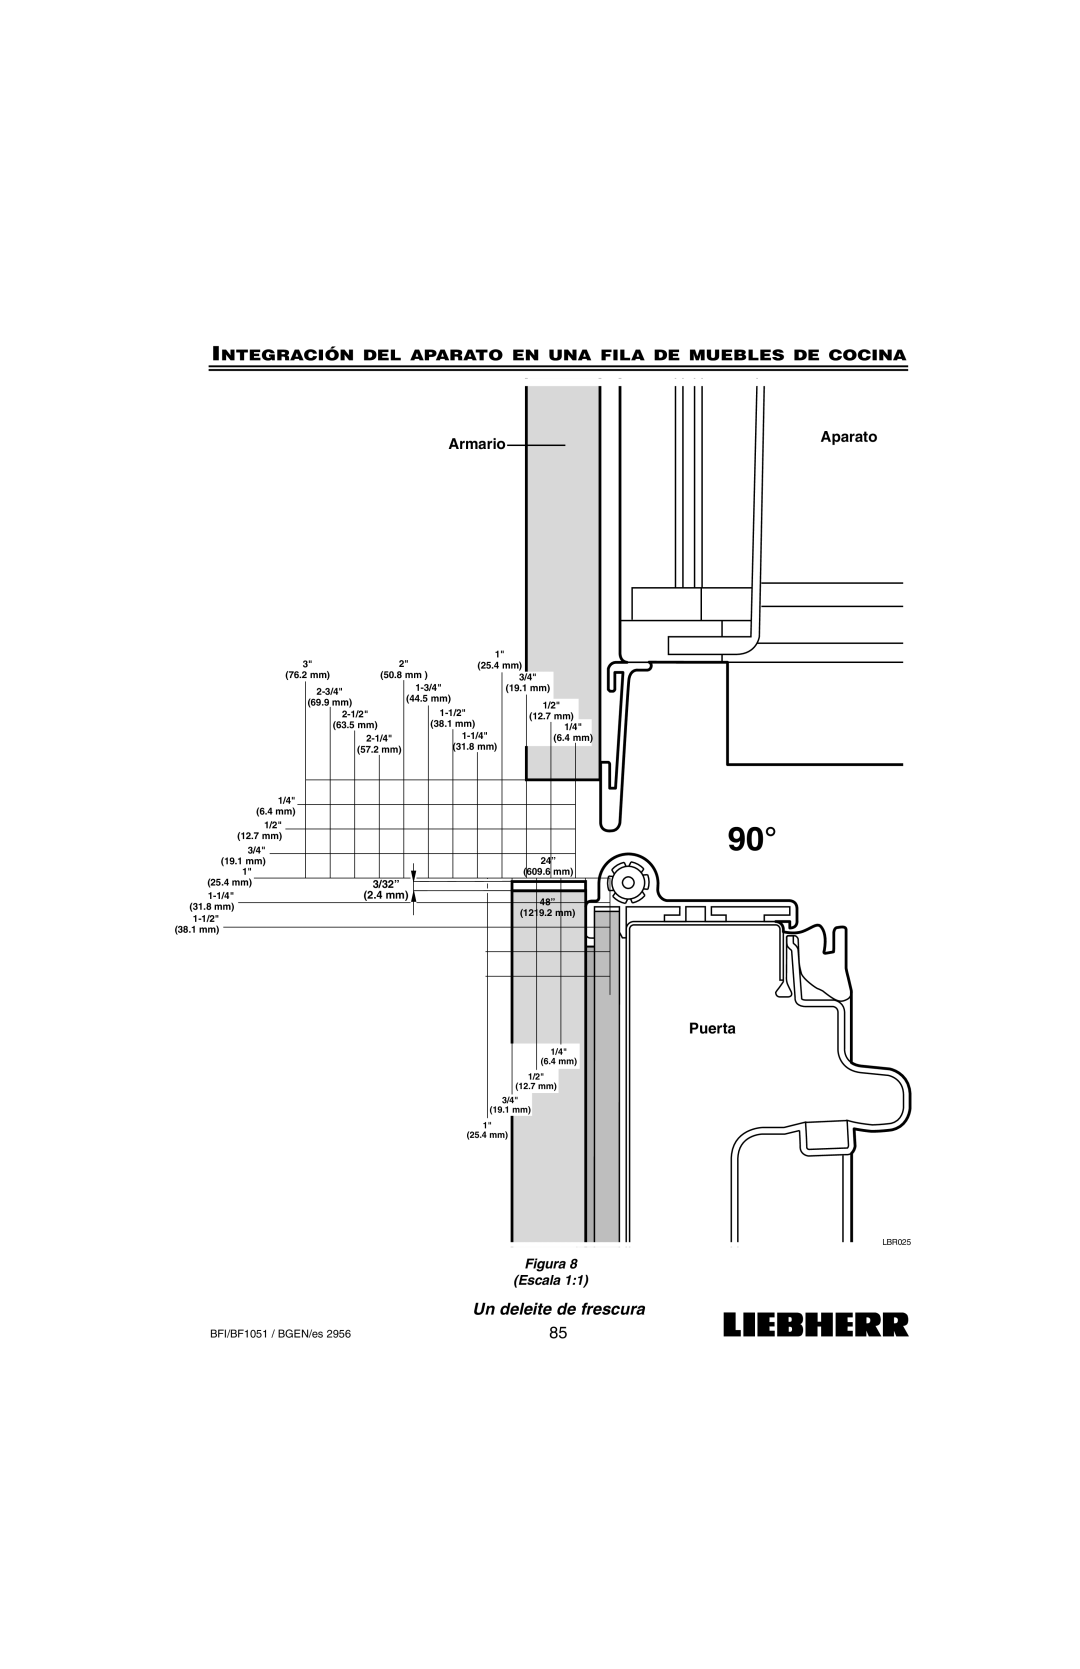 Liebherr BF1051, BFI1051 installation instructions Un deleite de frescura, C Armario, A Aparato, Puerta, Figura Escala 1:1 